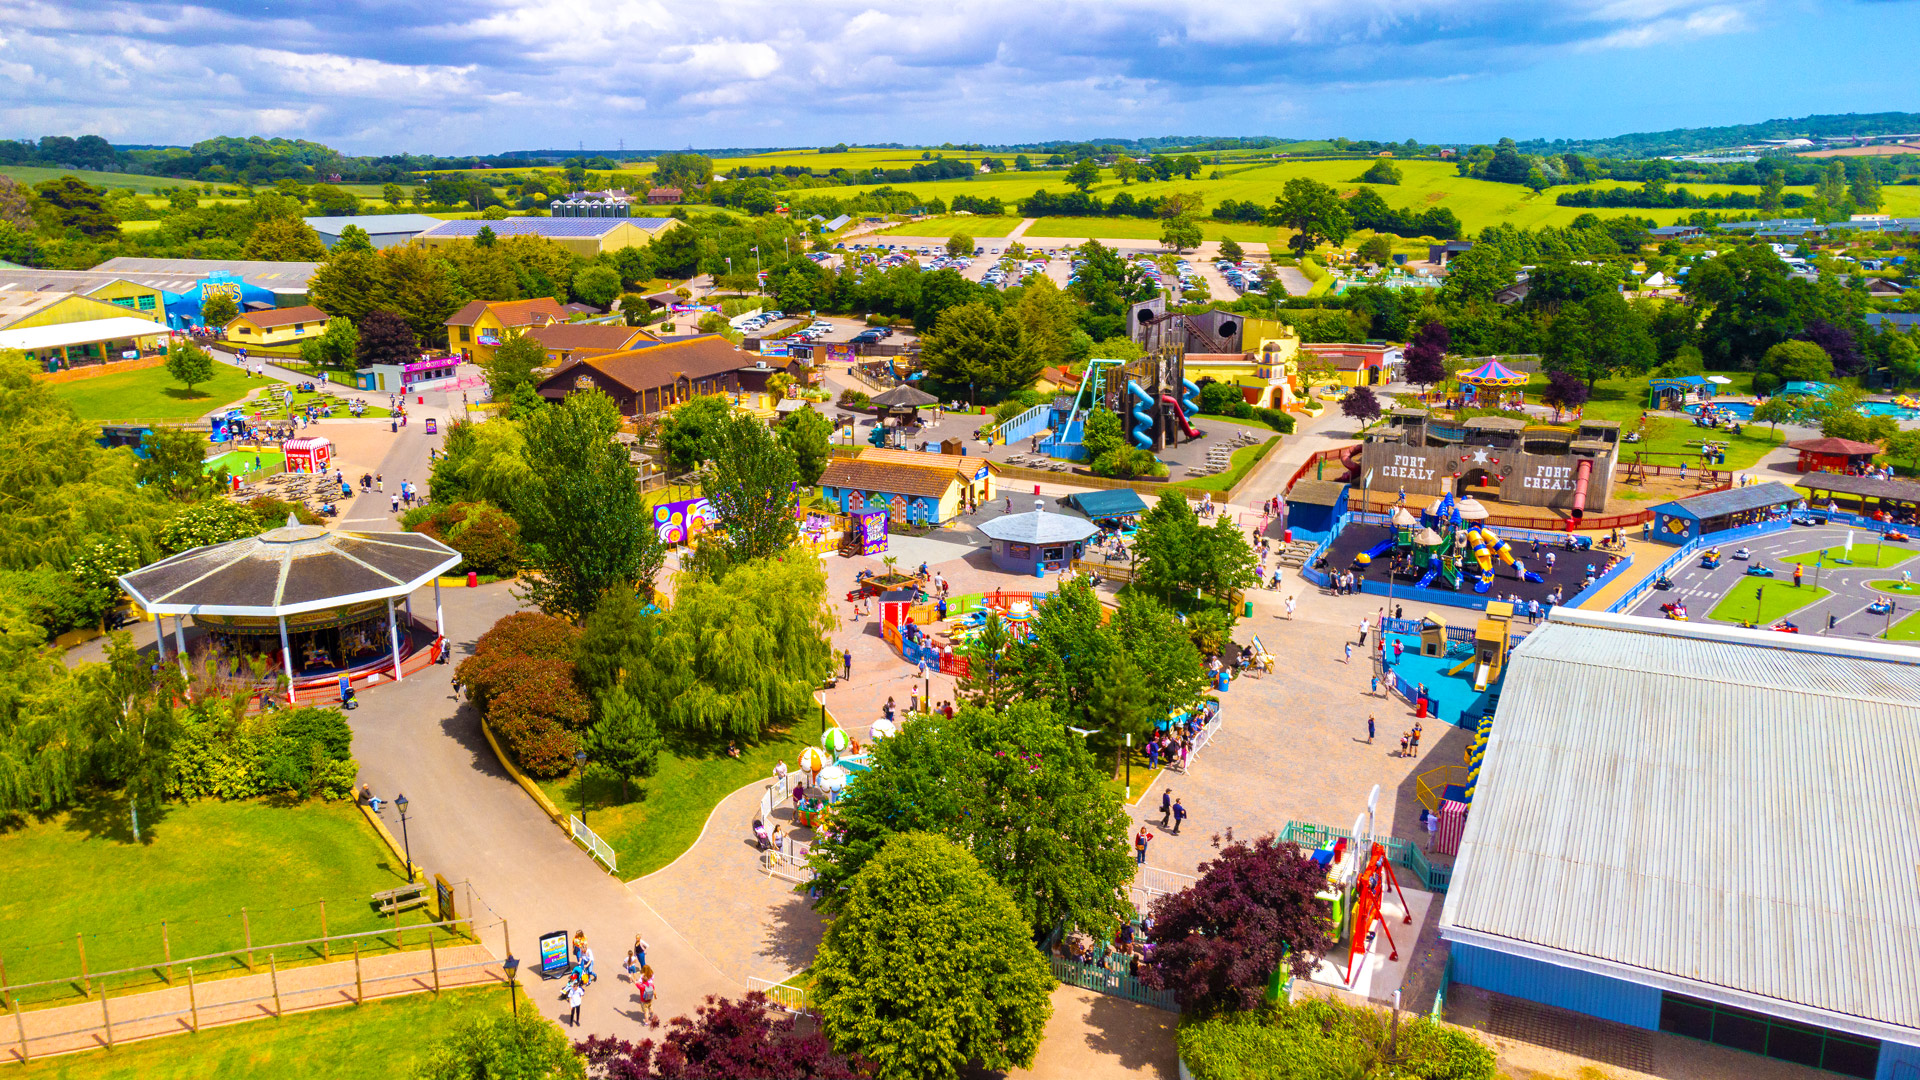 Crealy Theme Park & Resort  Biggest Family Theme Park Devon